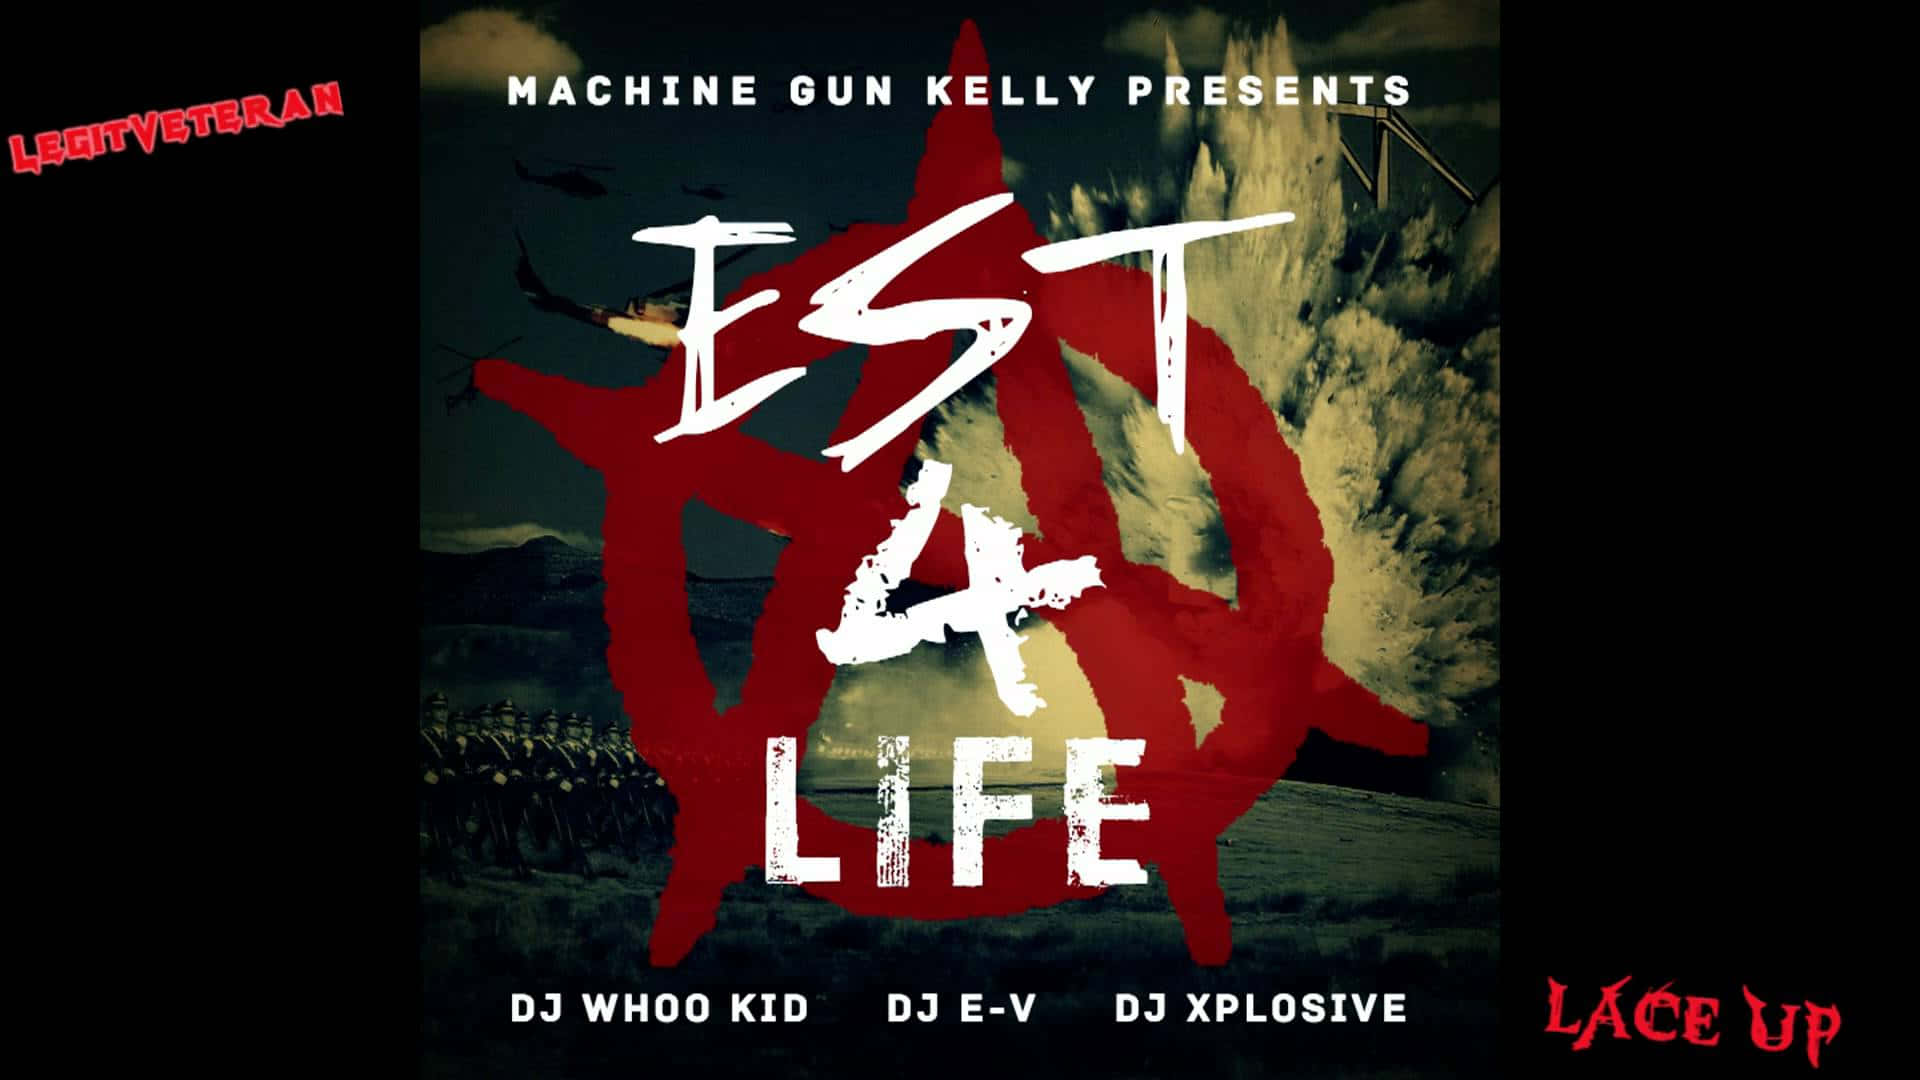 "Eminem and Machine Gun Kelly - Music Legends Collide" Wallpaper